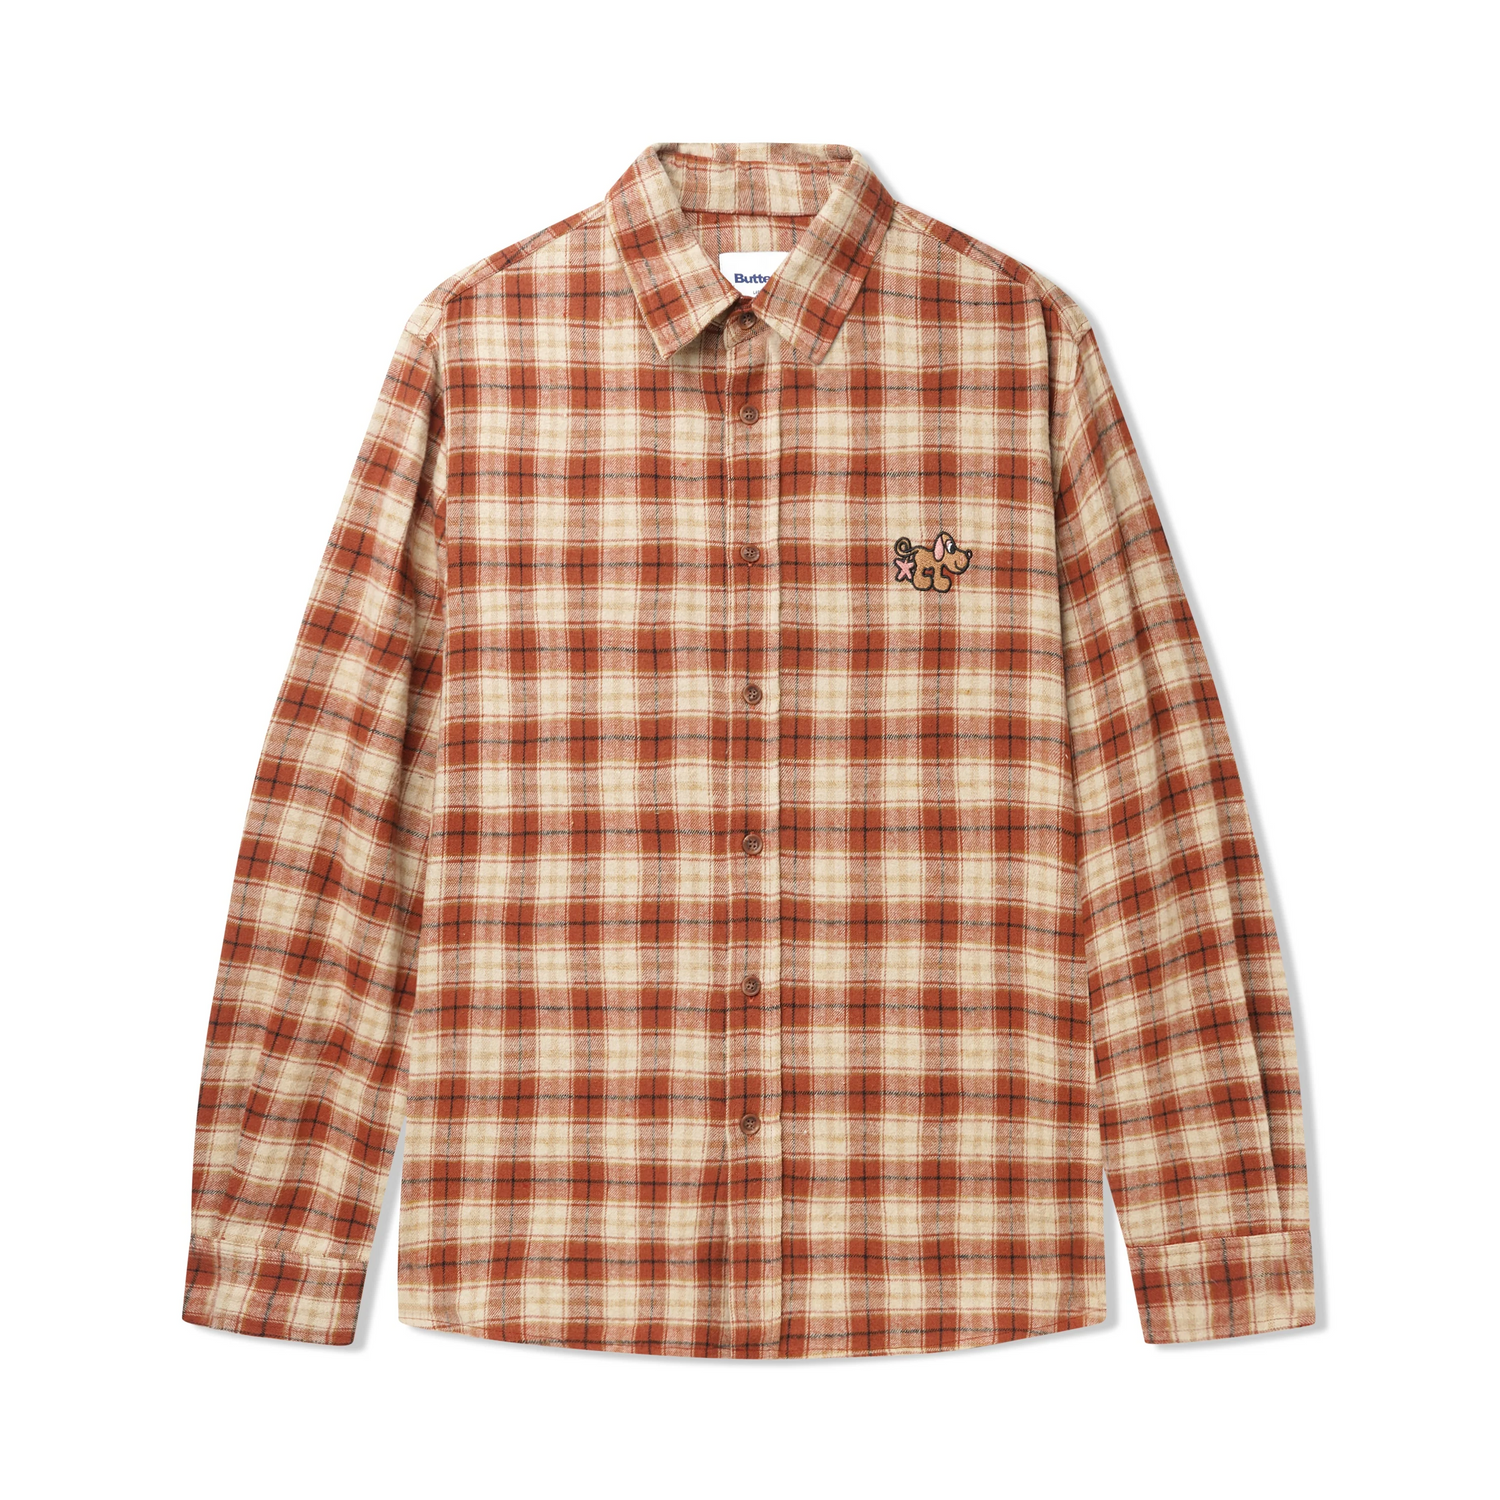 Pooch Flannel Shirt, Brick